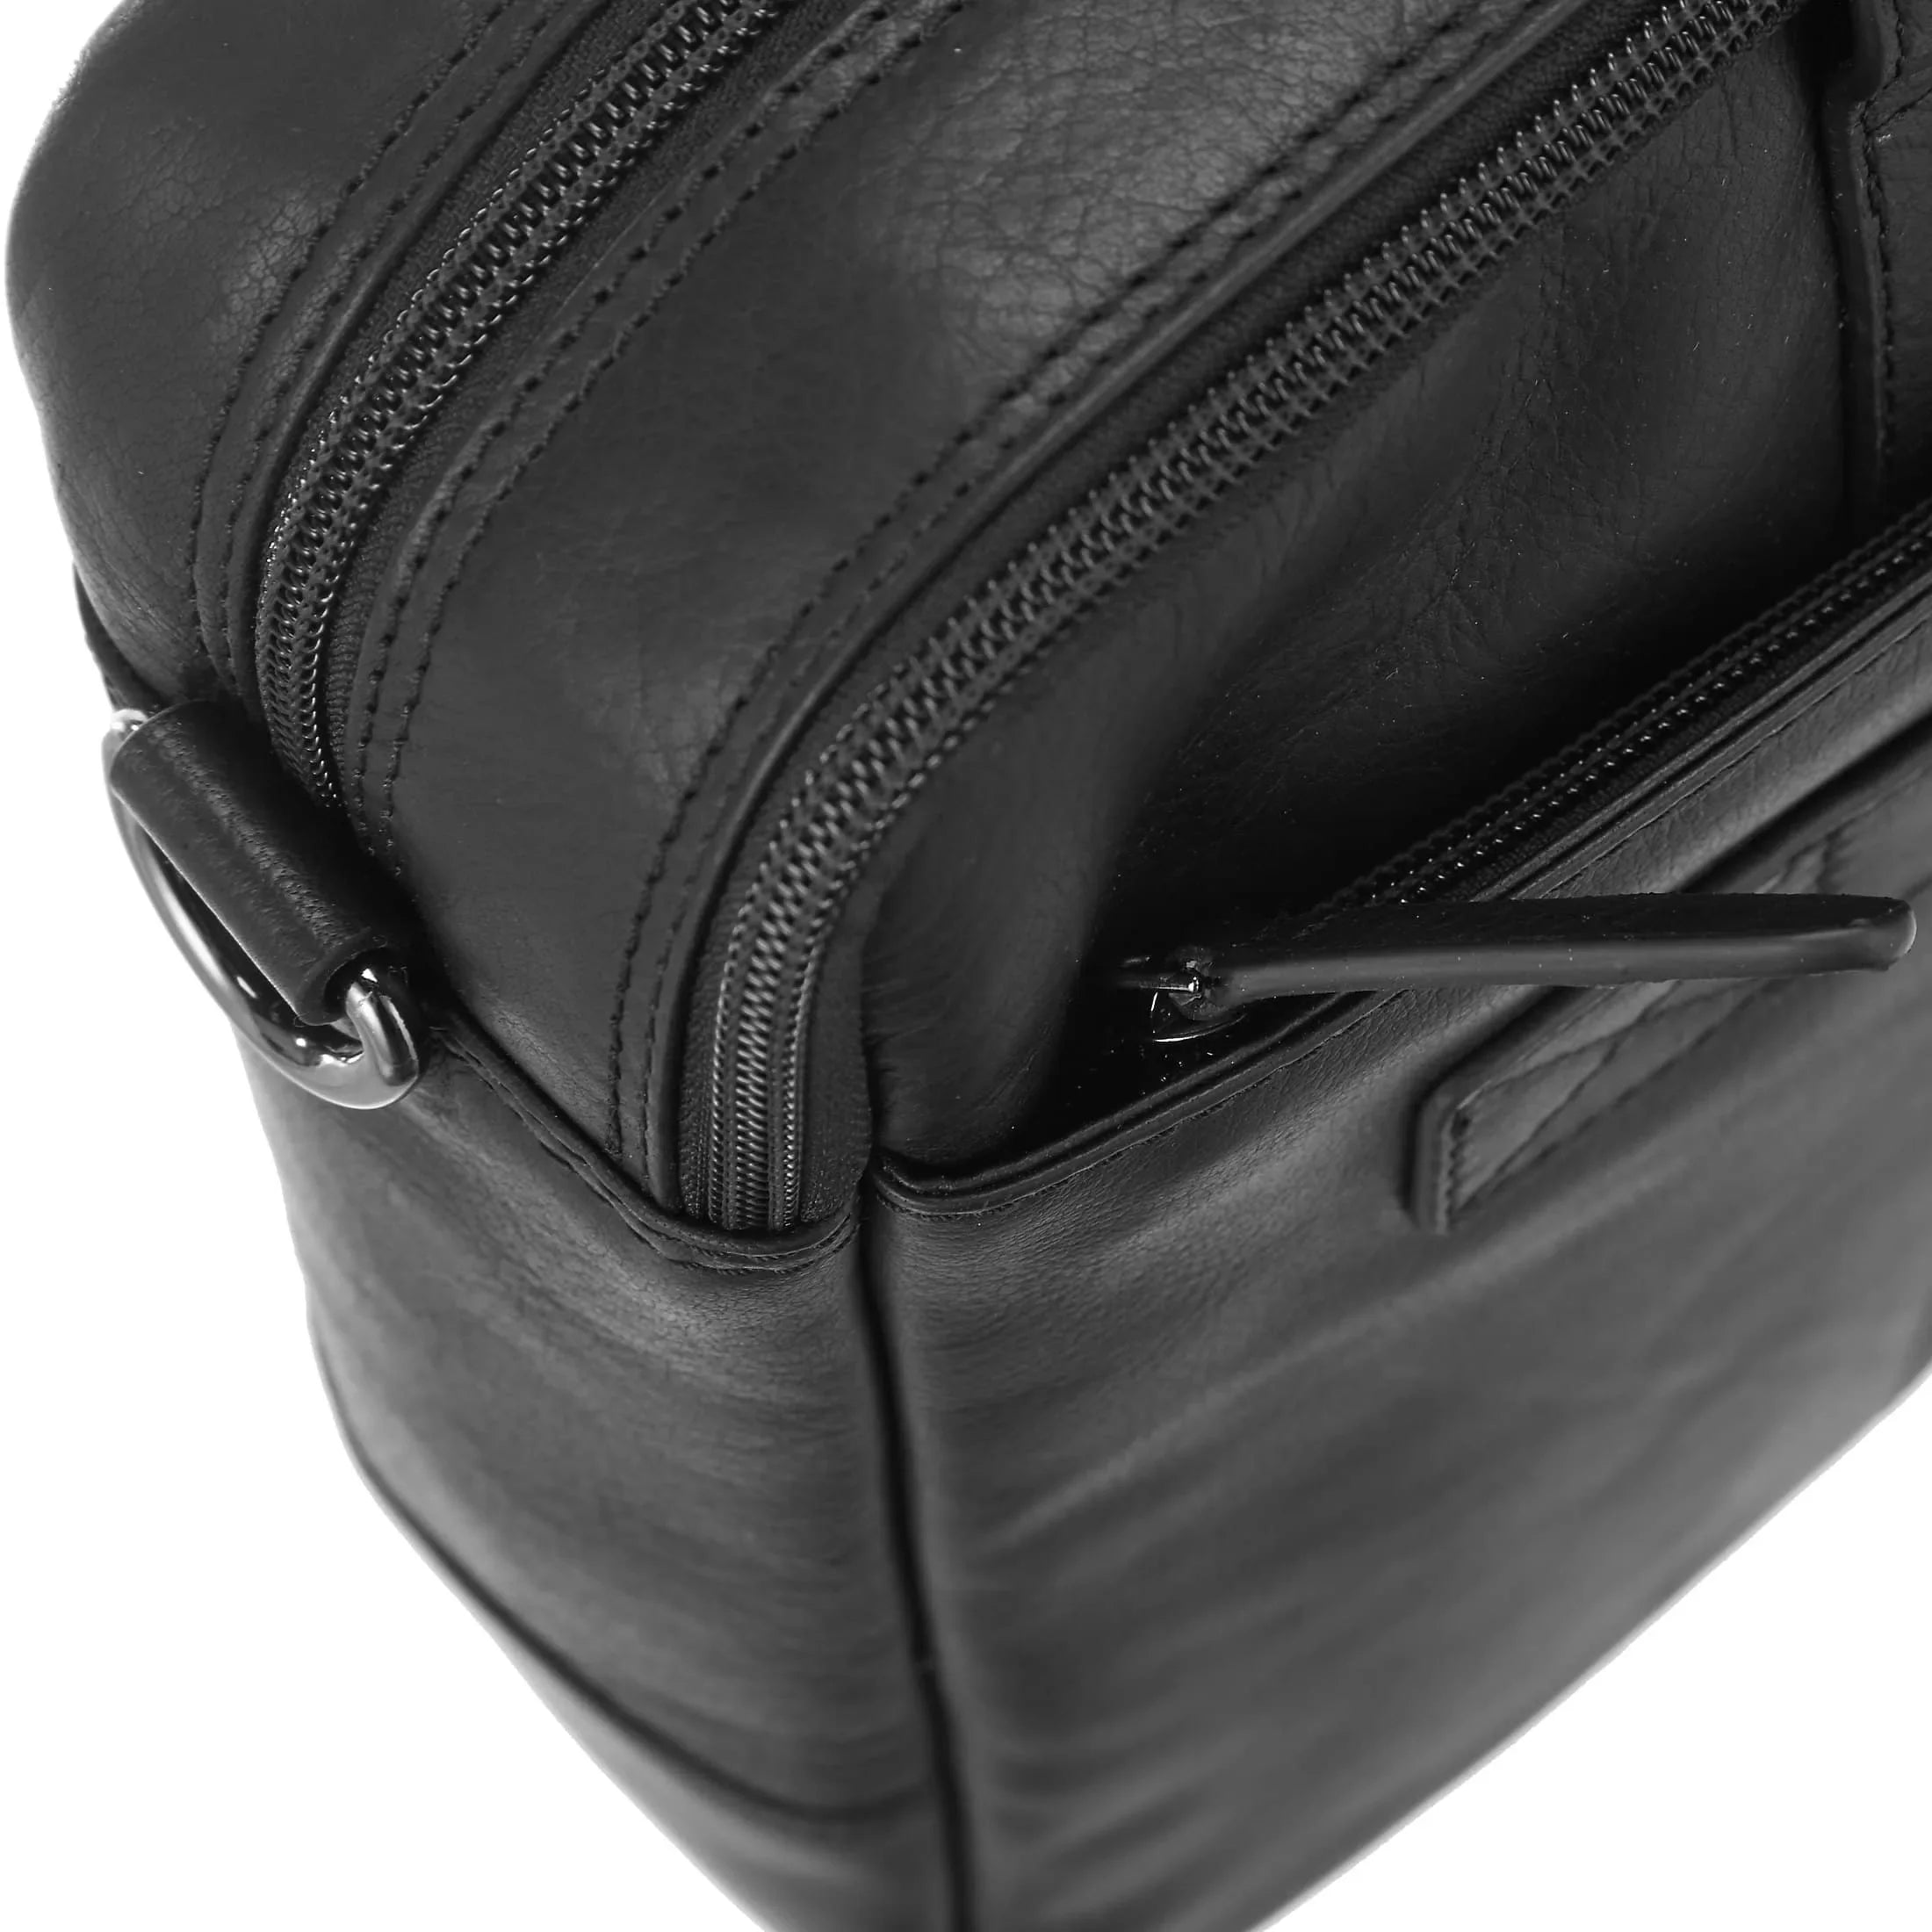 Strellson Hyde Park Briefbag SHZ 40 cm - black